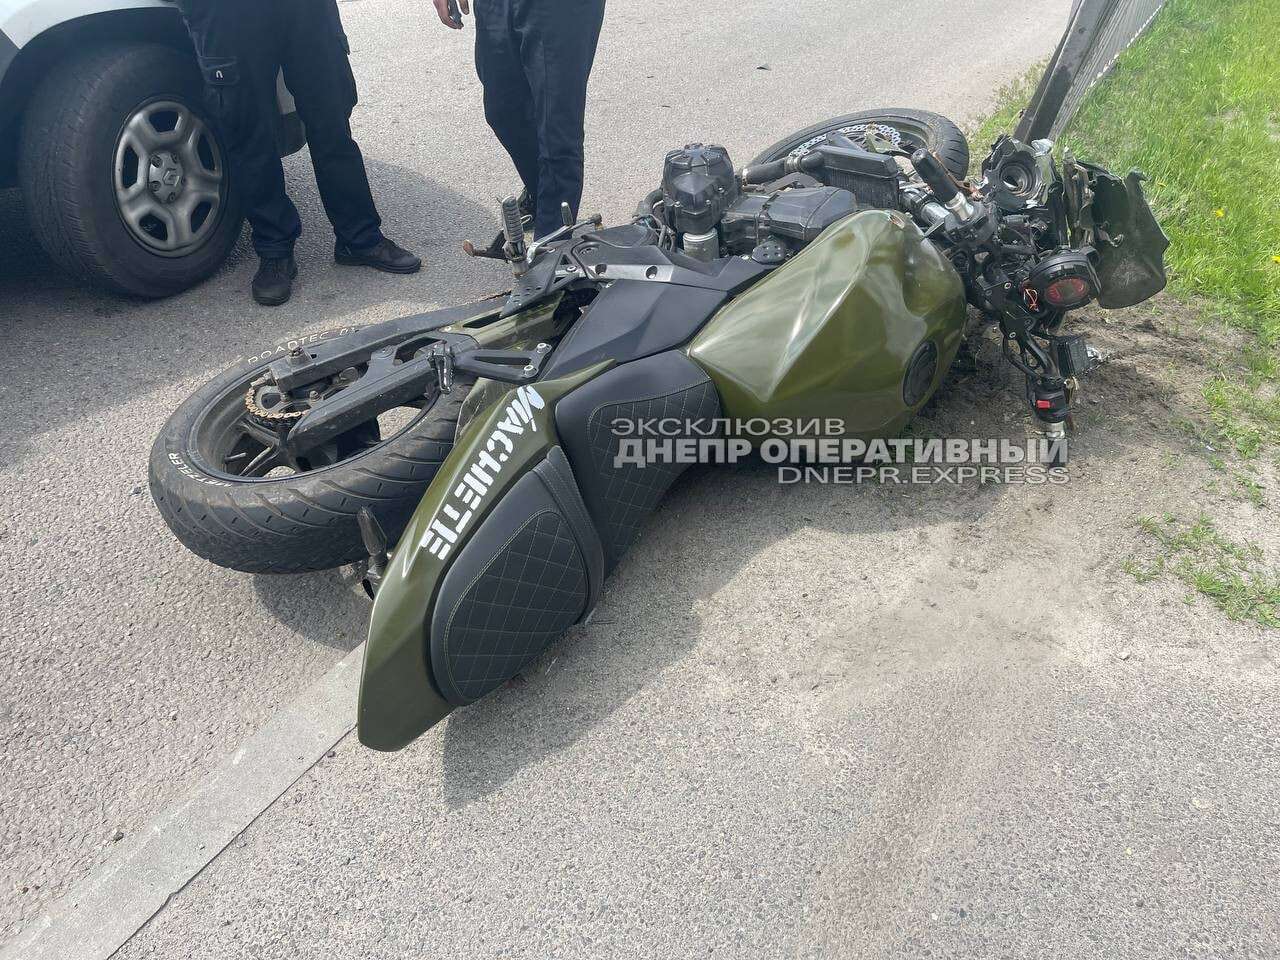 Мотоциклист сбил полицейского – || фото: dnepr.express